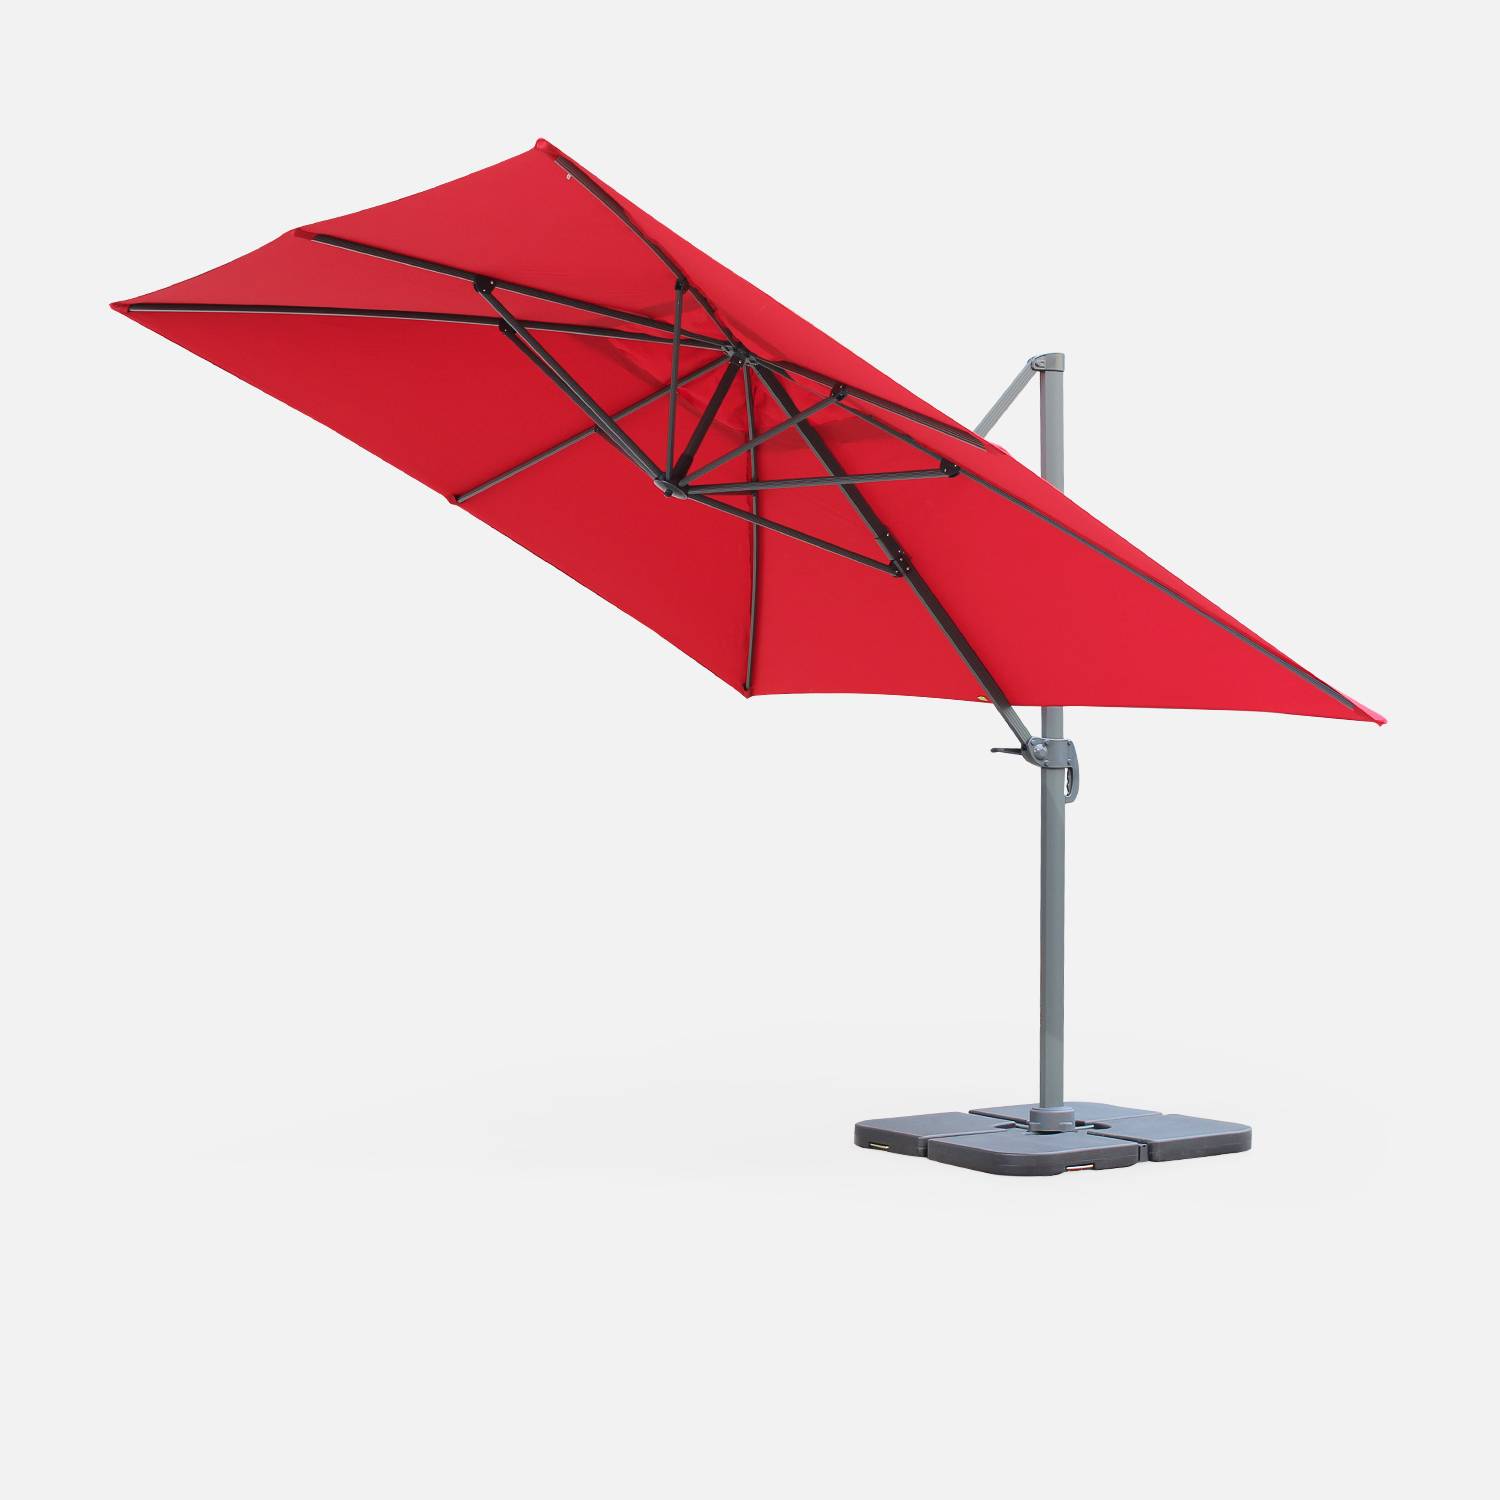 Rectangular cantilever parasol, 3x4m - Saint Jean de Luz - Red,sweeek,Photo5